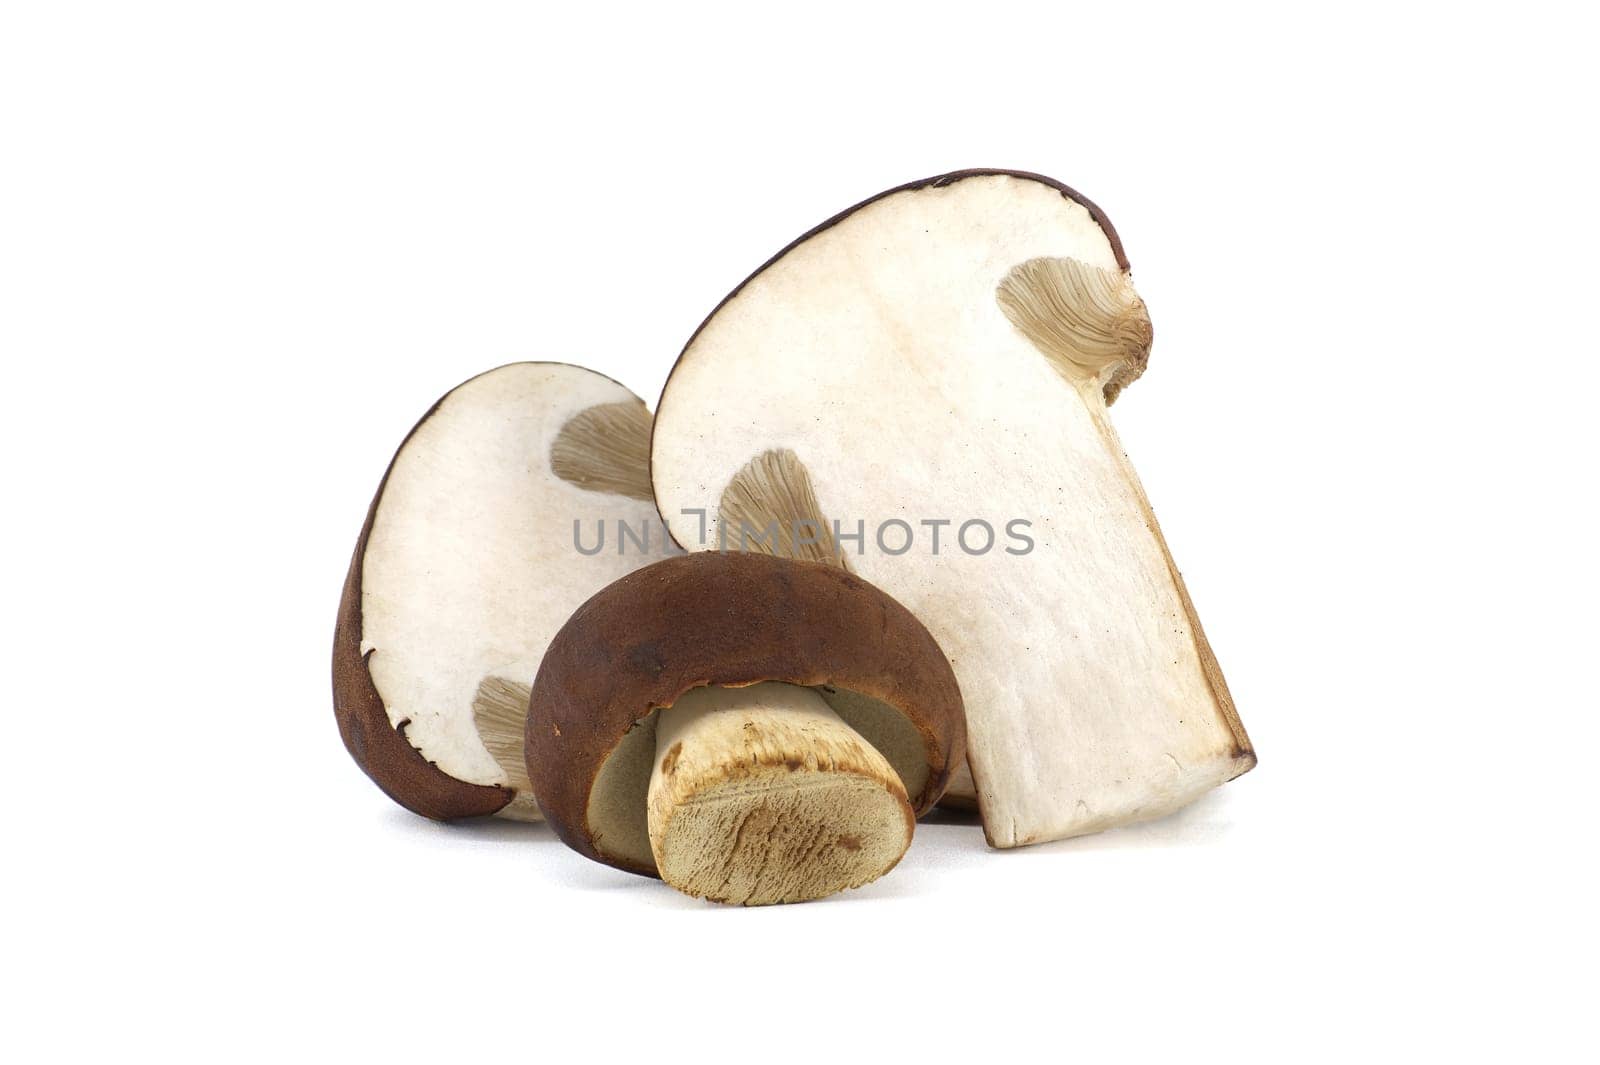 Pine bolete mushrooms over white background by NetPix